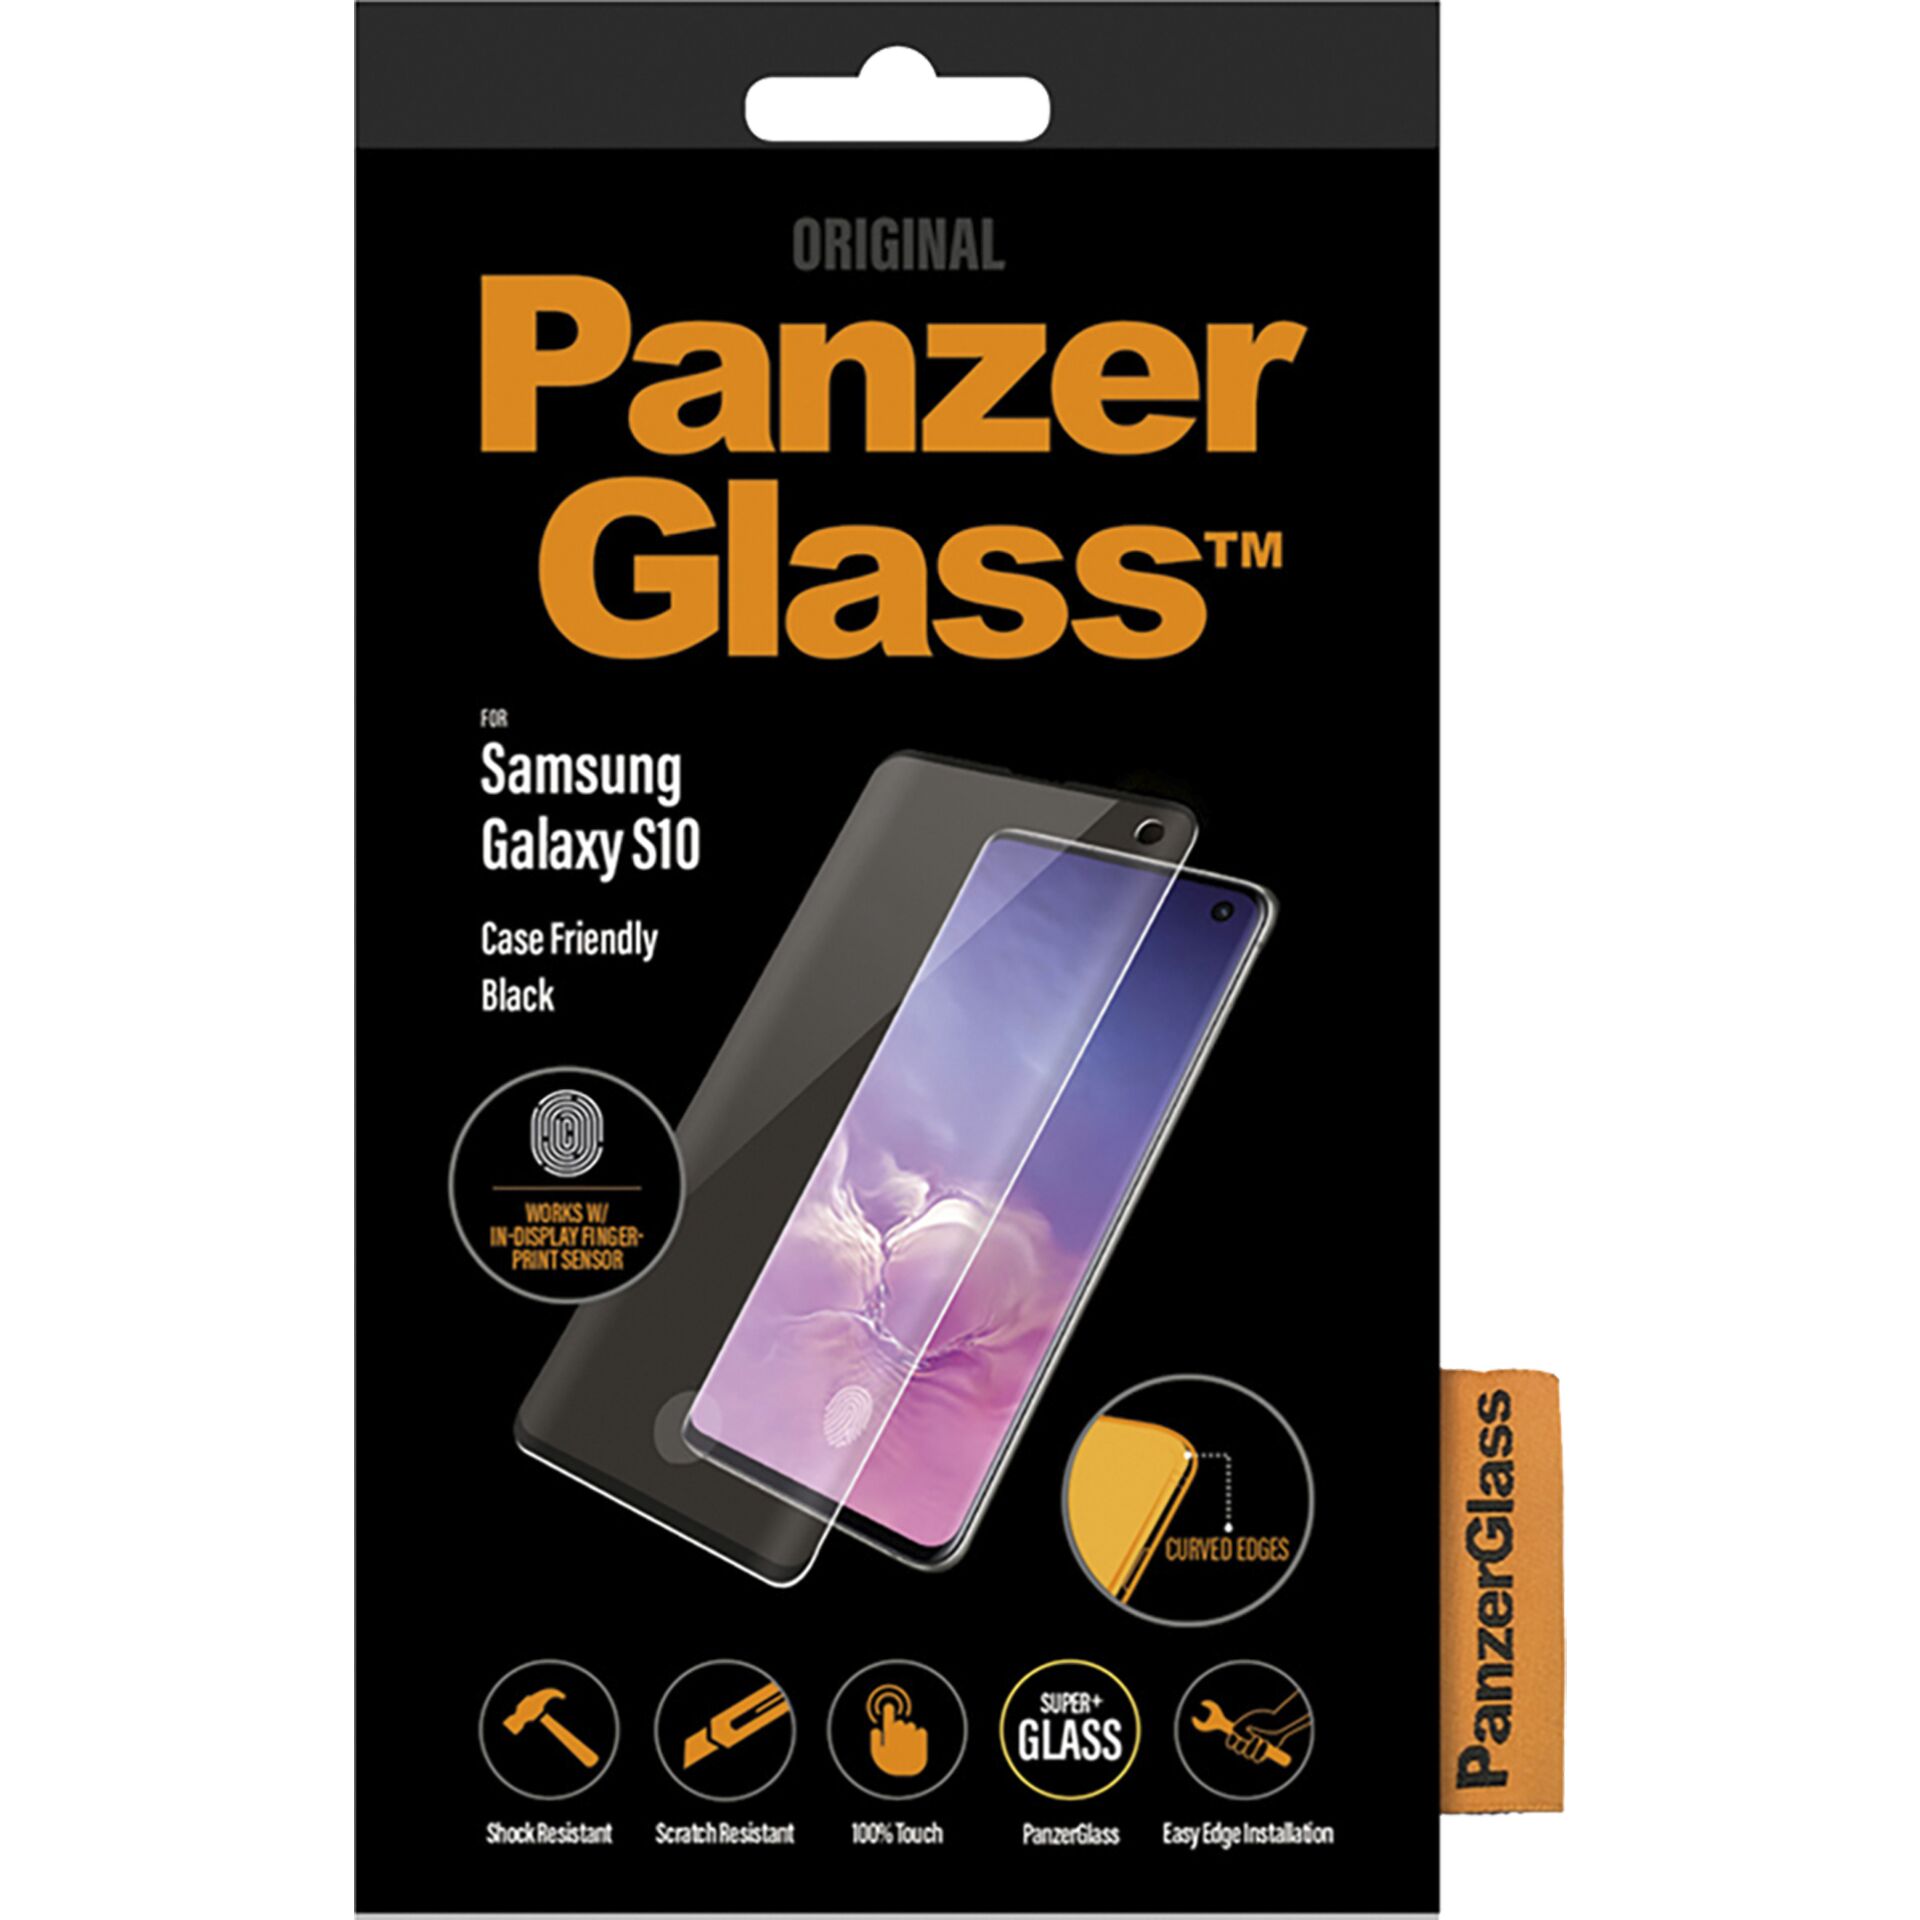 PanzerGlass CaseFriendly for Galaxy S10 black